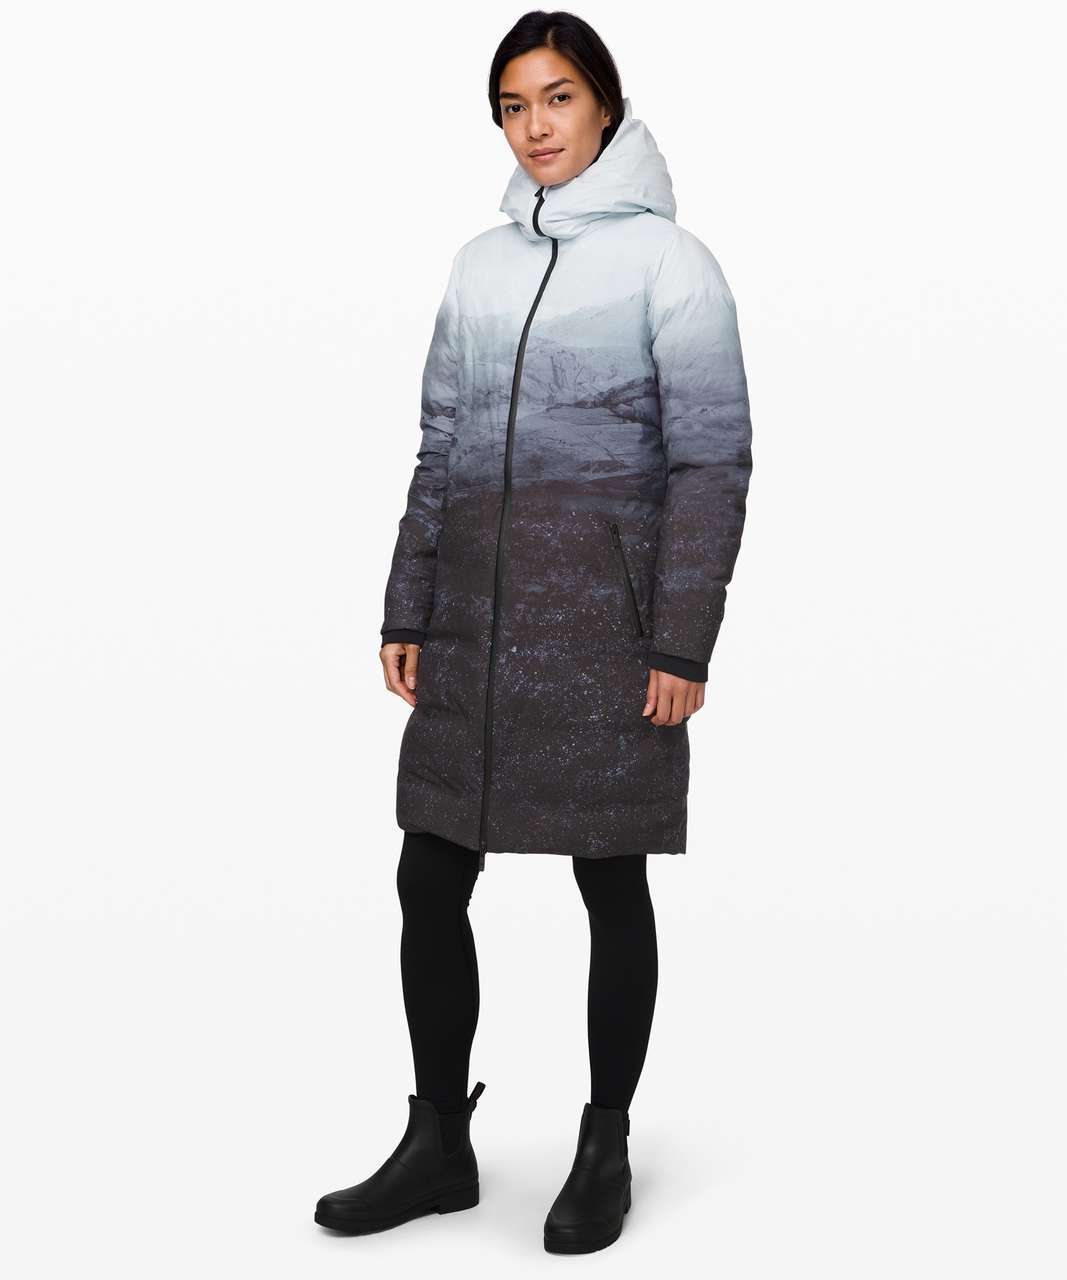 Lululemon Slush Hour Parka White Waterproof Down Coat Size 6- $398 SOLD-OUT  NWT